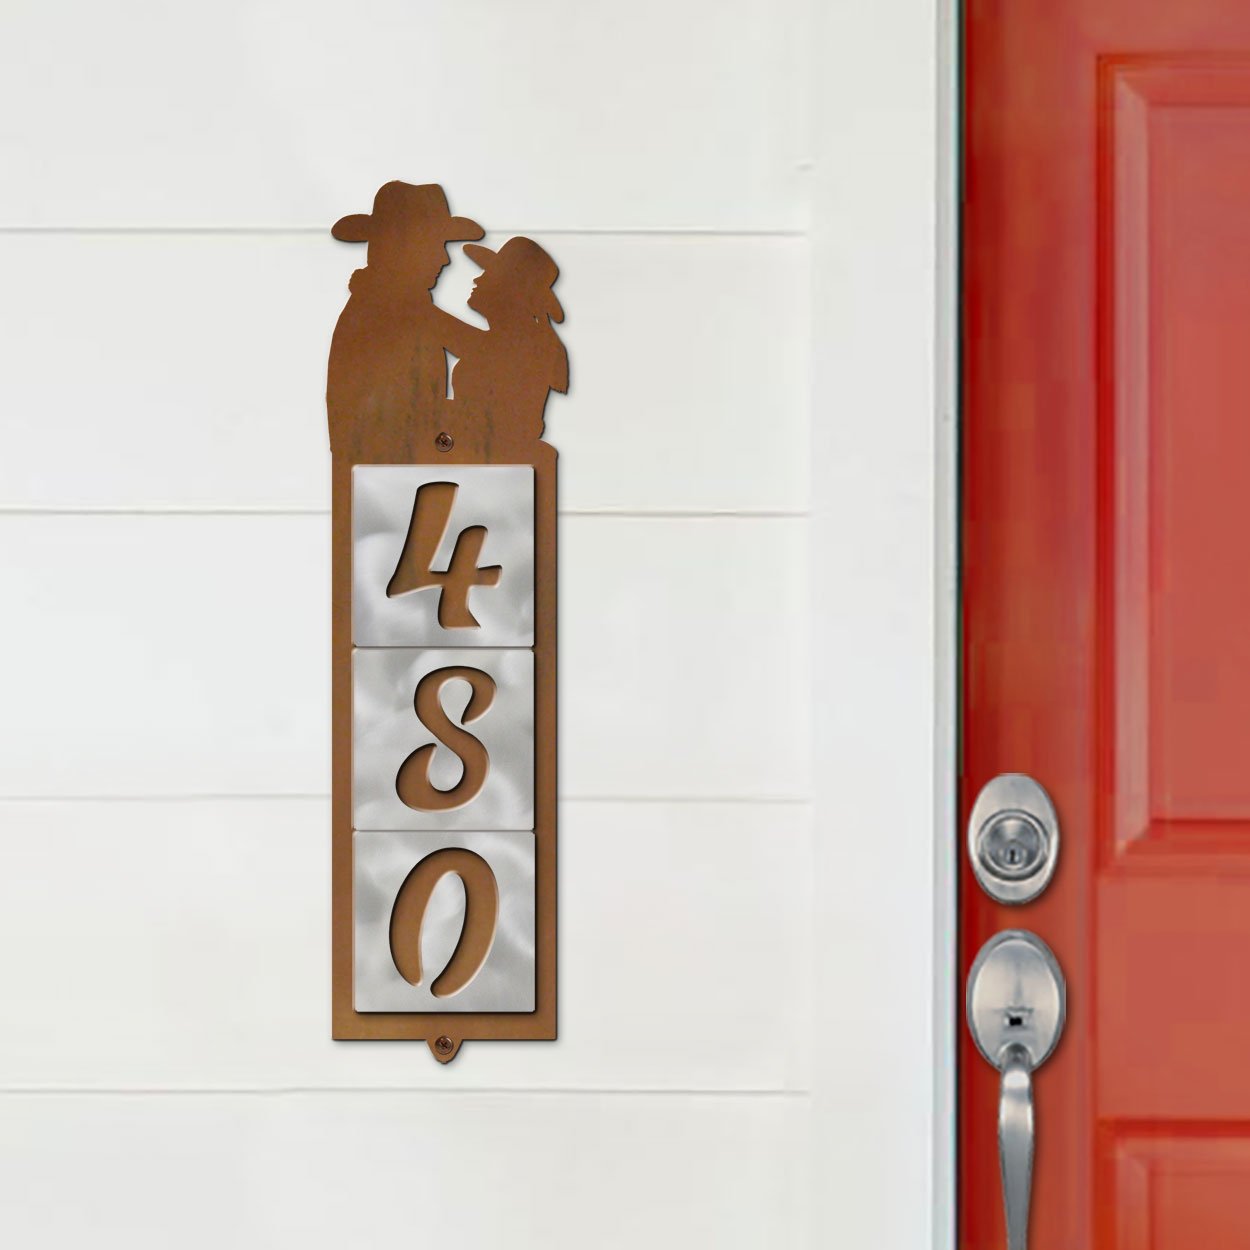 605083 - Cowboy Couple Design 3-Digit Vertical Tile House Numbers